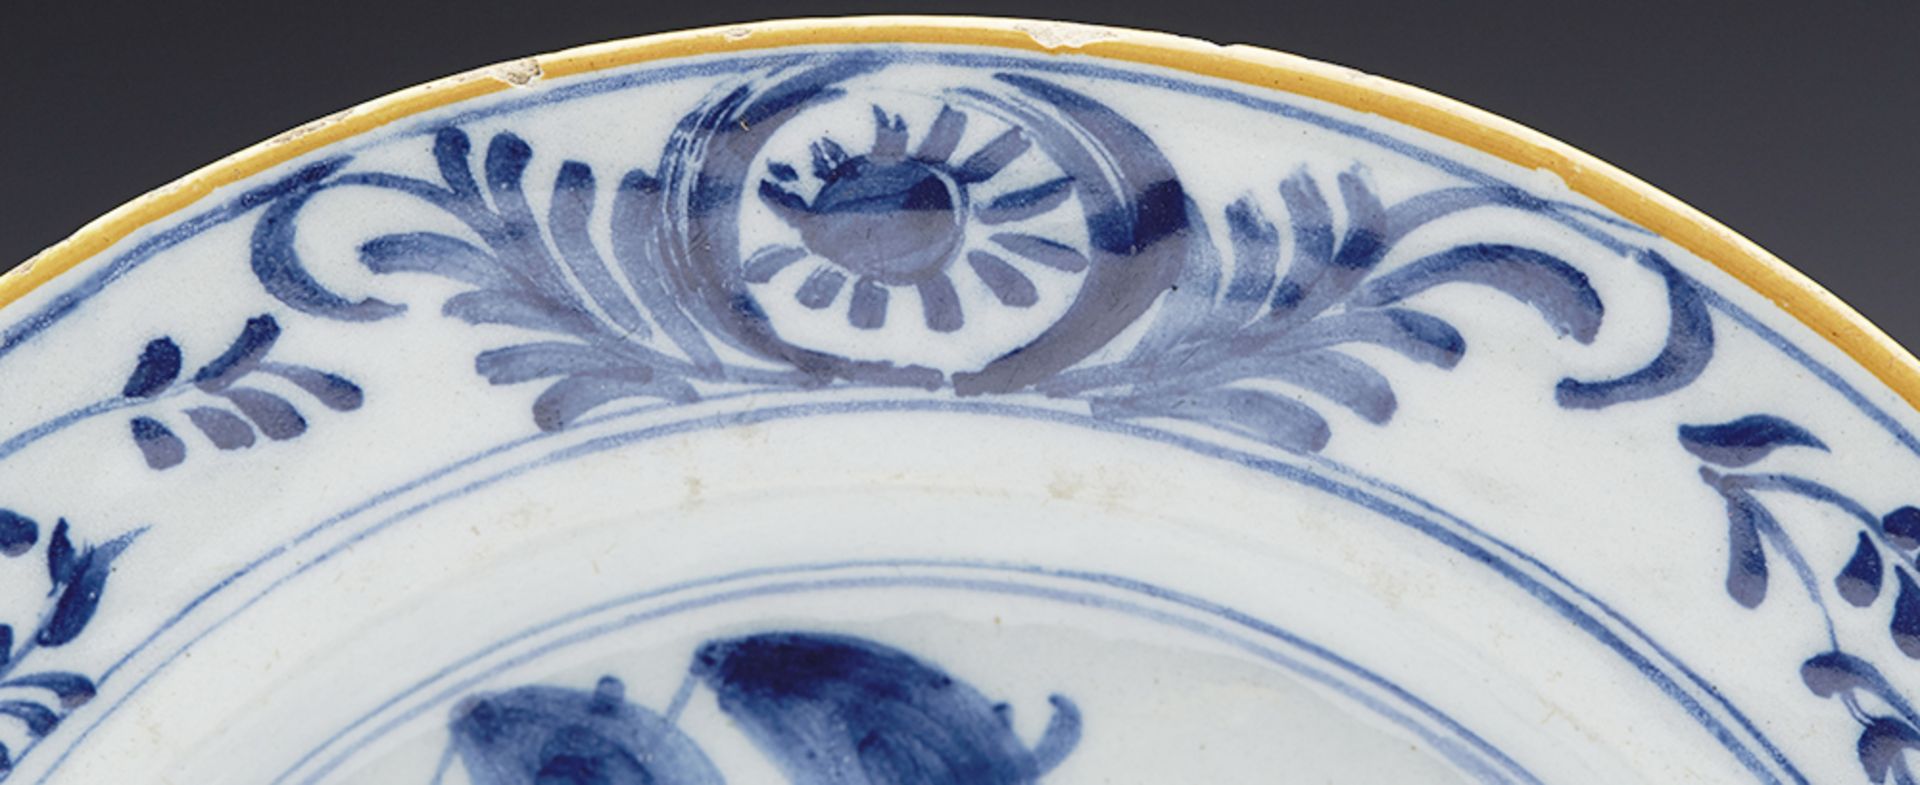 Pair Antique Dutch Delft Blue And White Floral Design Plates 18Th C. - Image 6 of 13